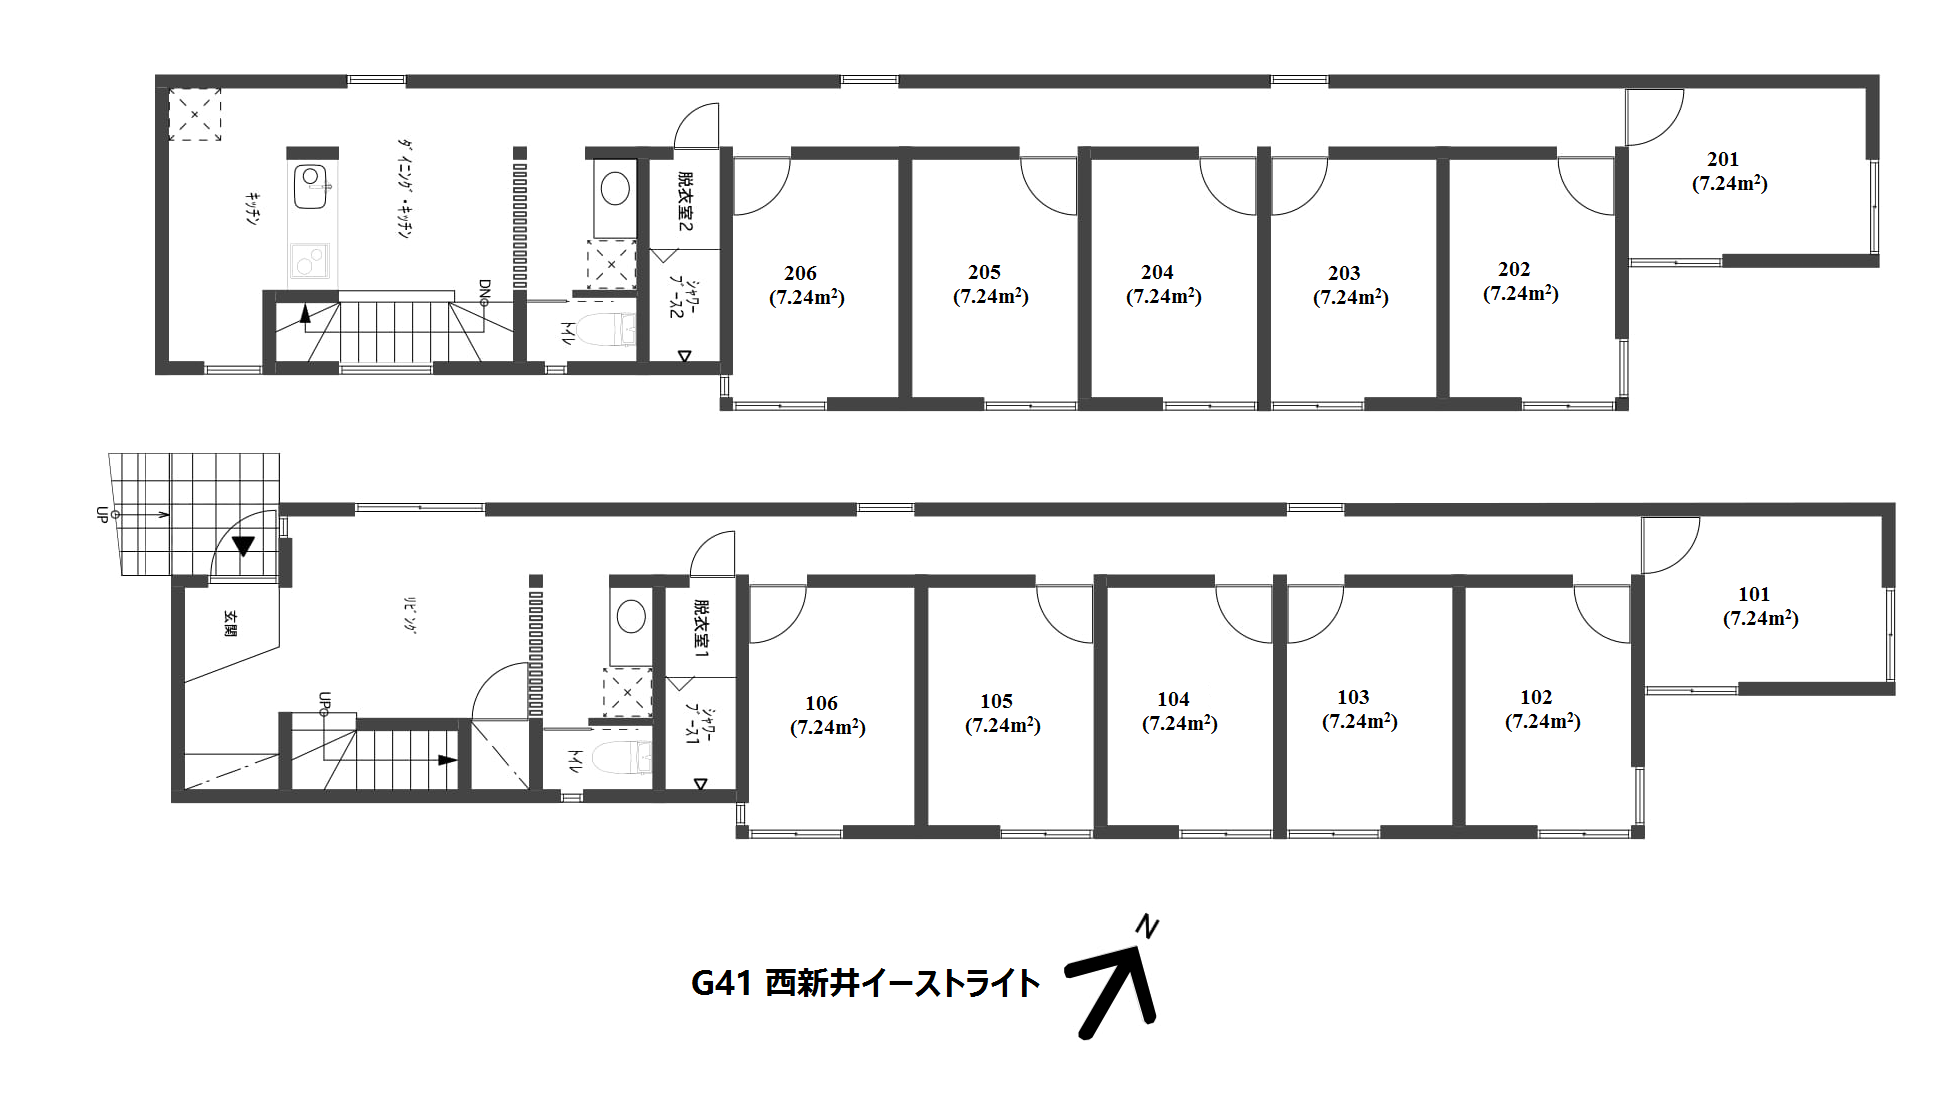 G41/J316 Tokyoβ Umejima 1 (Nishiarai EAST RIGHT)間取り図